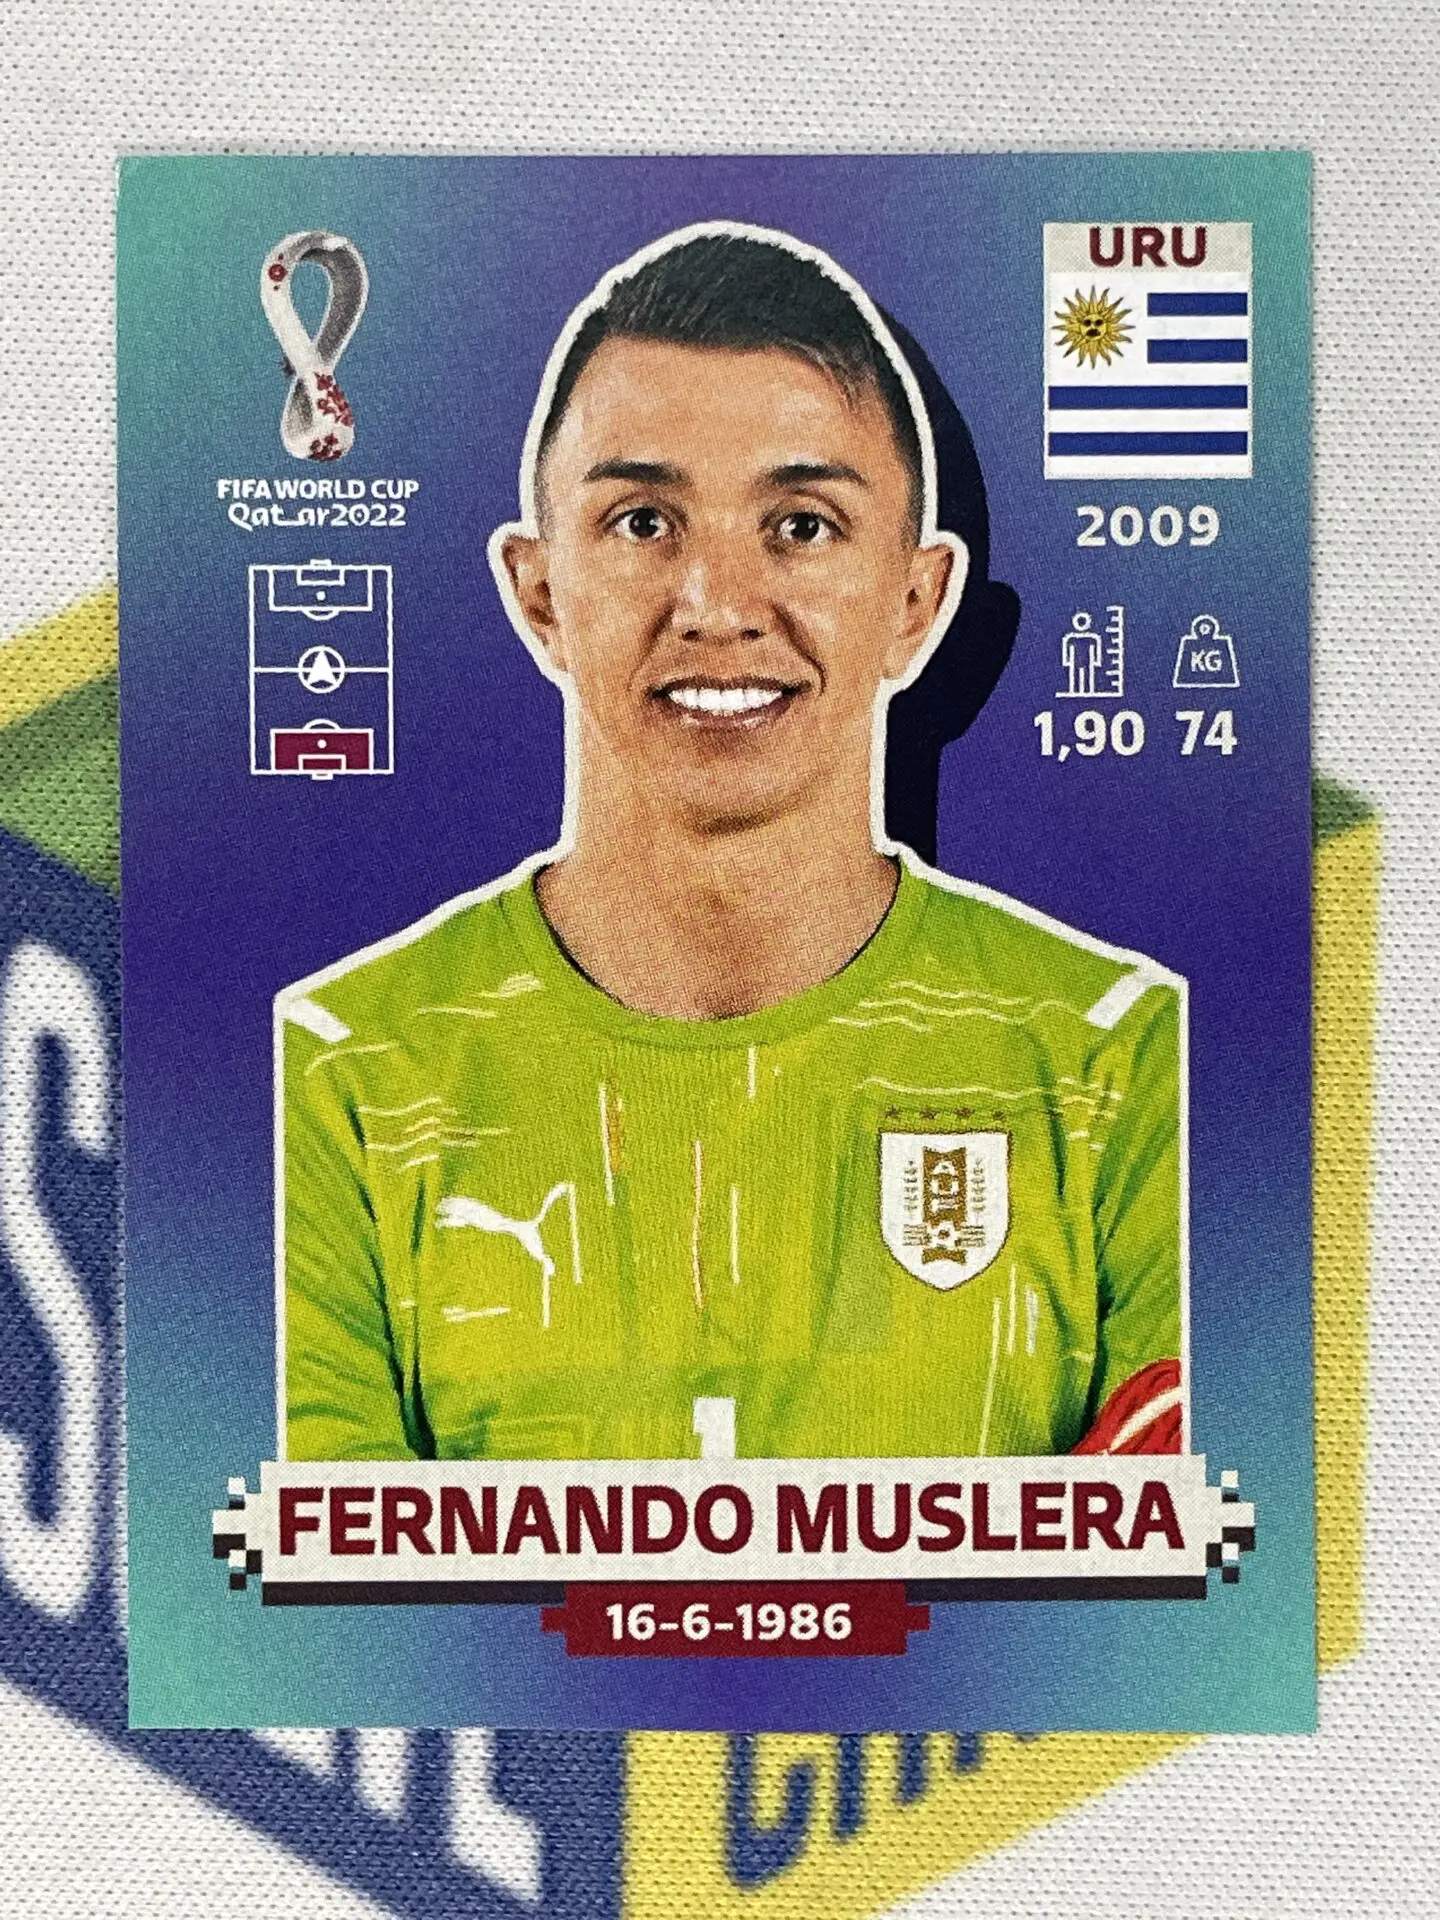 Fernando Muslera's iconic Uruguay kit